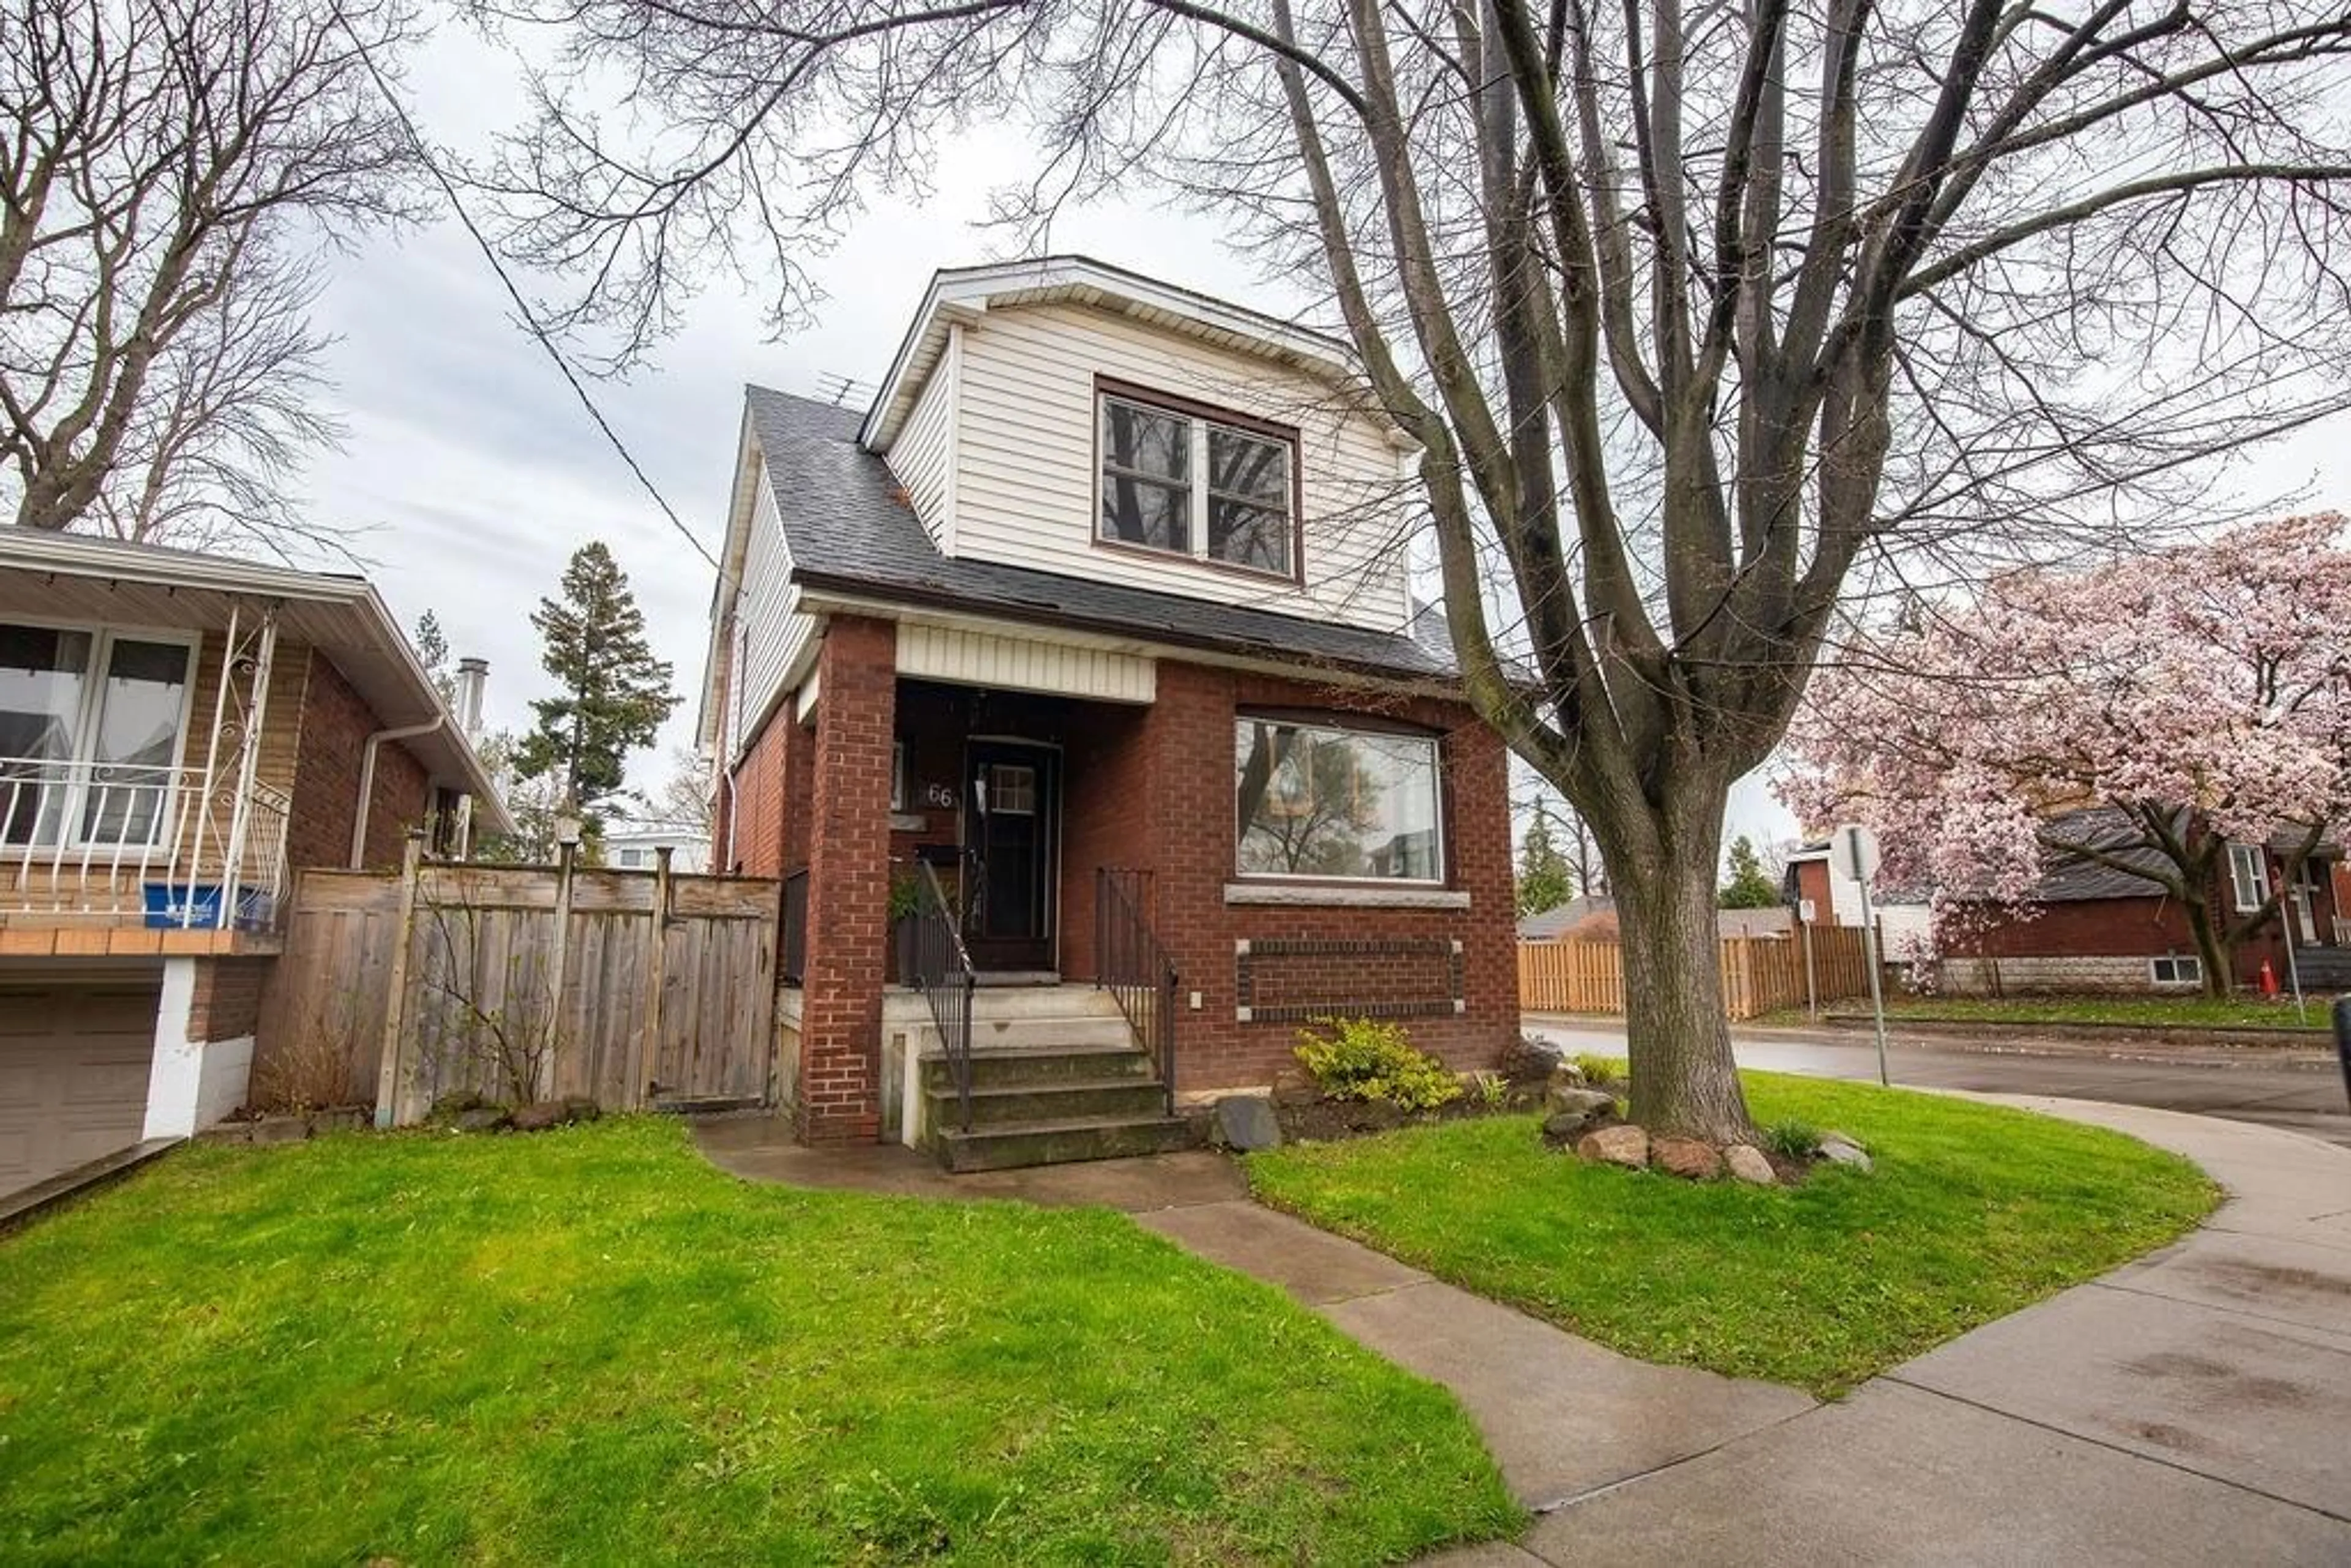 Home with brick exterior material for 66 Cameron Ave, Hamilton Ontario L8H 4Z2